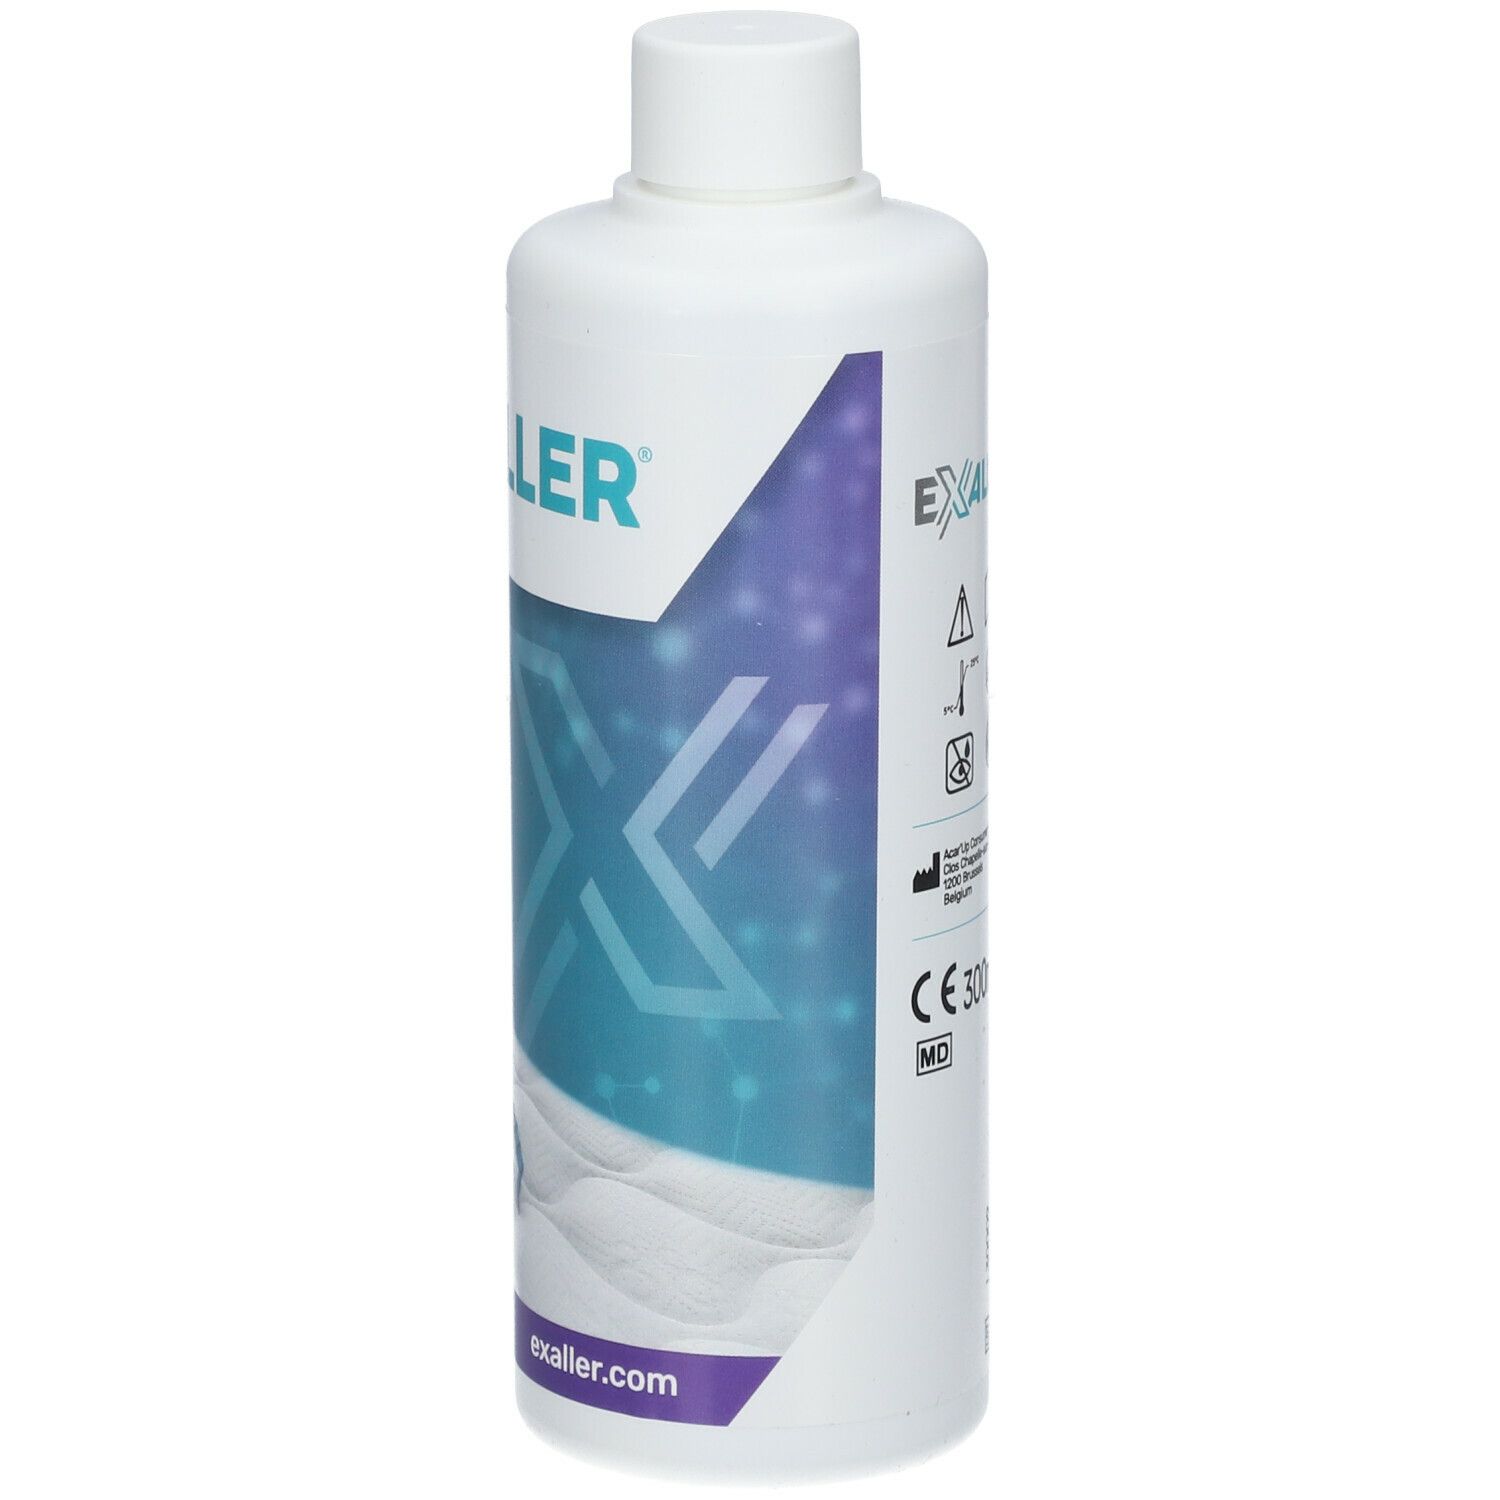 ExAller Spray Anti-Acariens 150ml